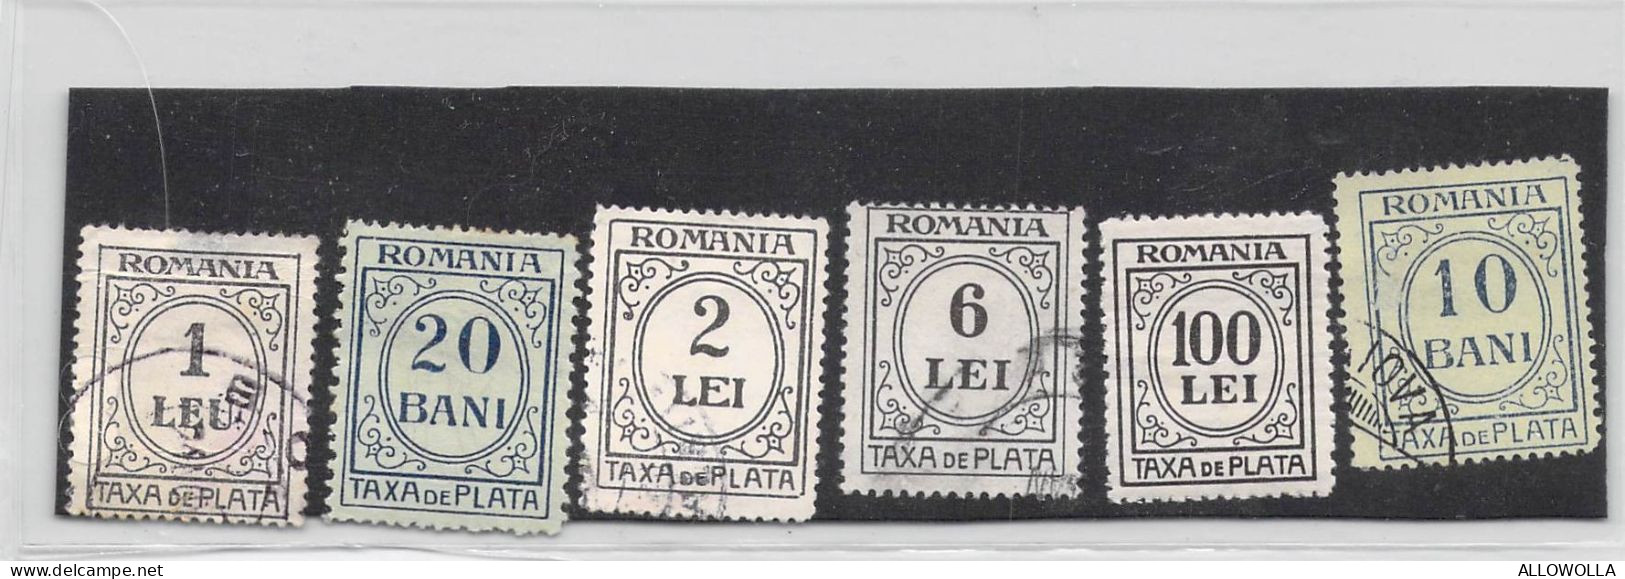 22186 " ROMANIA-TAXA DE PLATA-6 VALORI "  1 LEU E 20 BANI LINGUELLATI - Postage Due